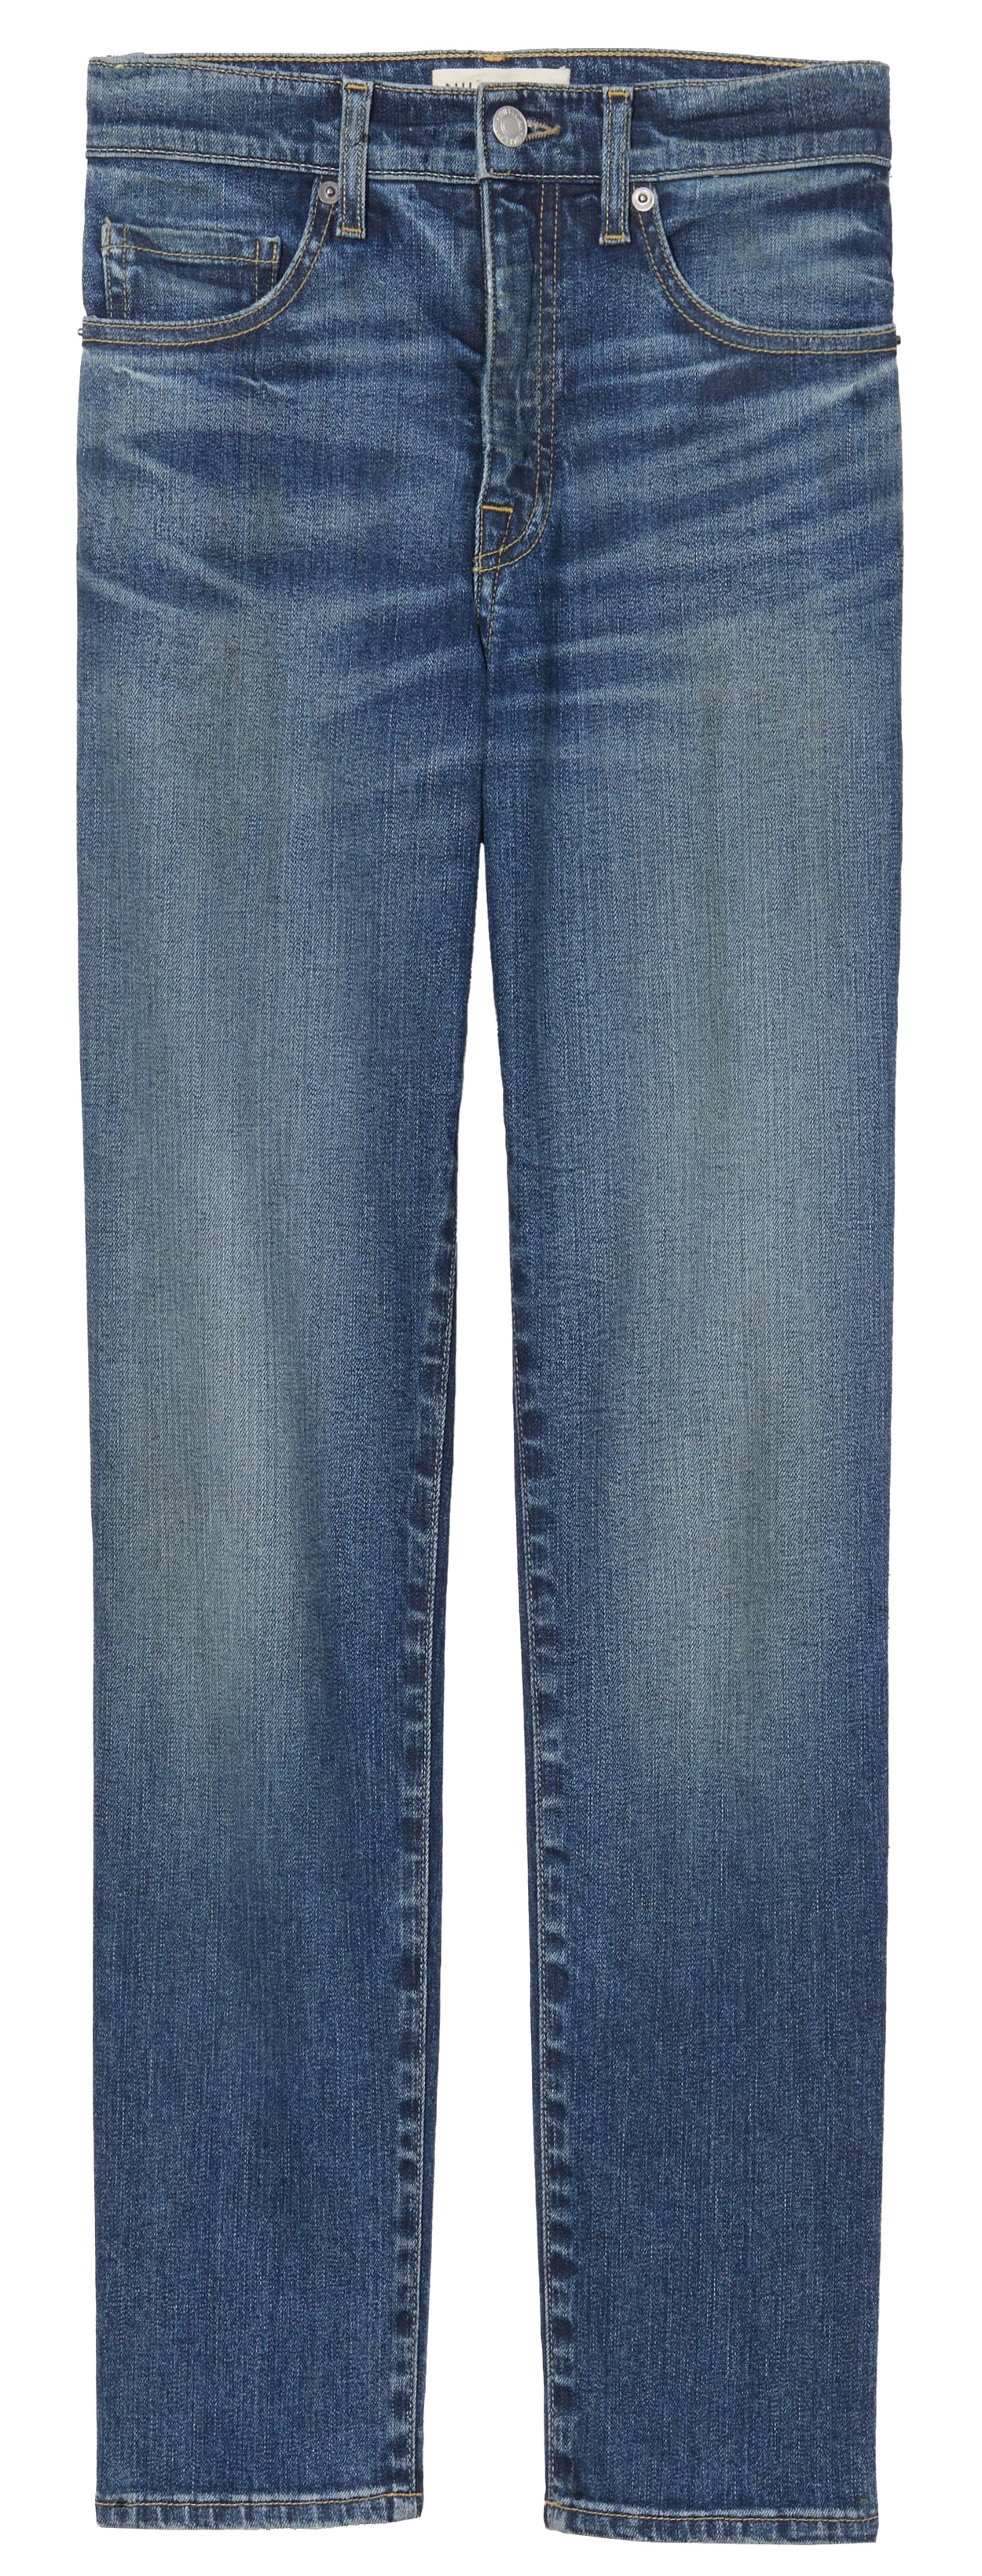 NILI LOTAN Jonas Skinny Jeans in Classic Wash 27